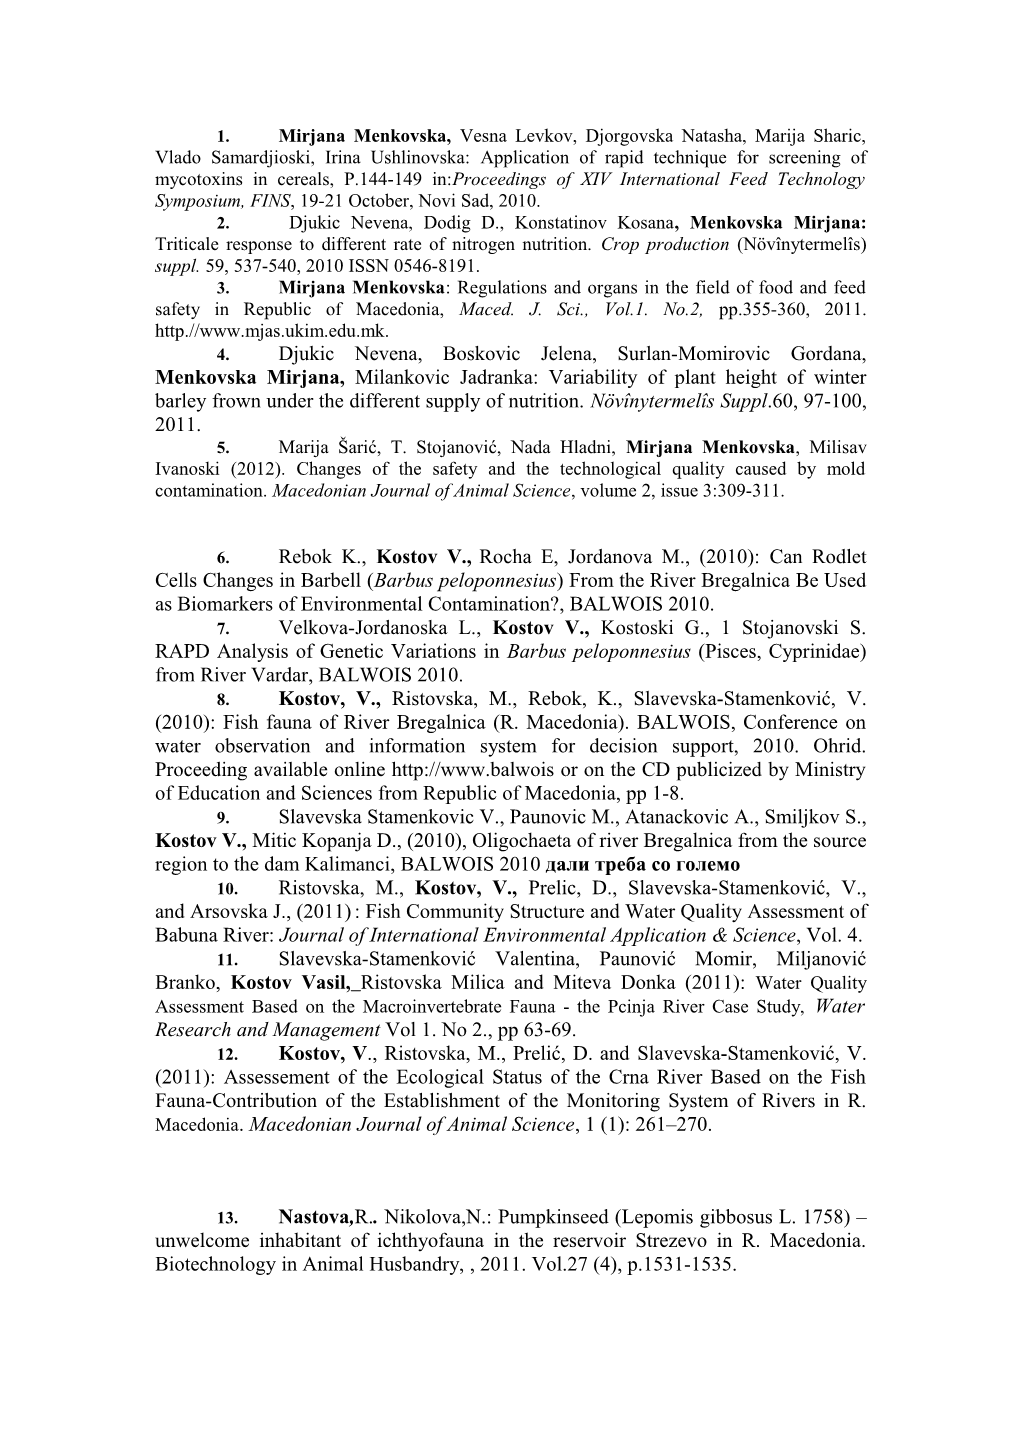 2. Djukic Nevena, Dodig D., Konstatinov Kosana , Menkovska Mirjana: Triticale Response